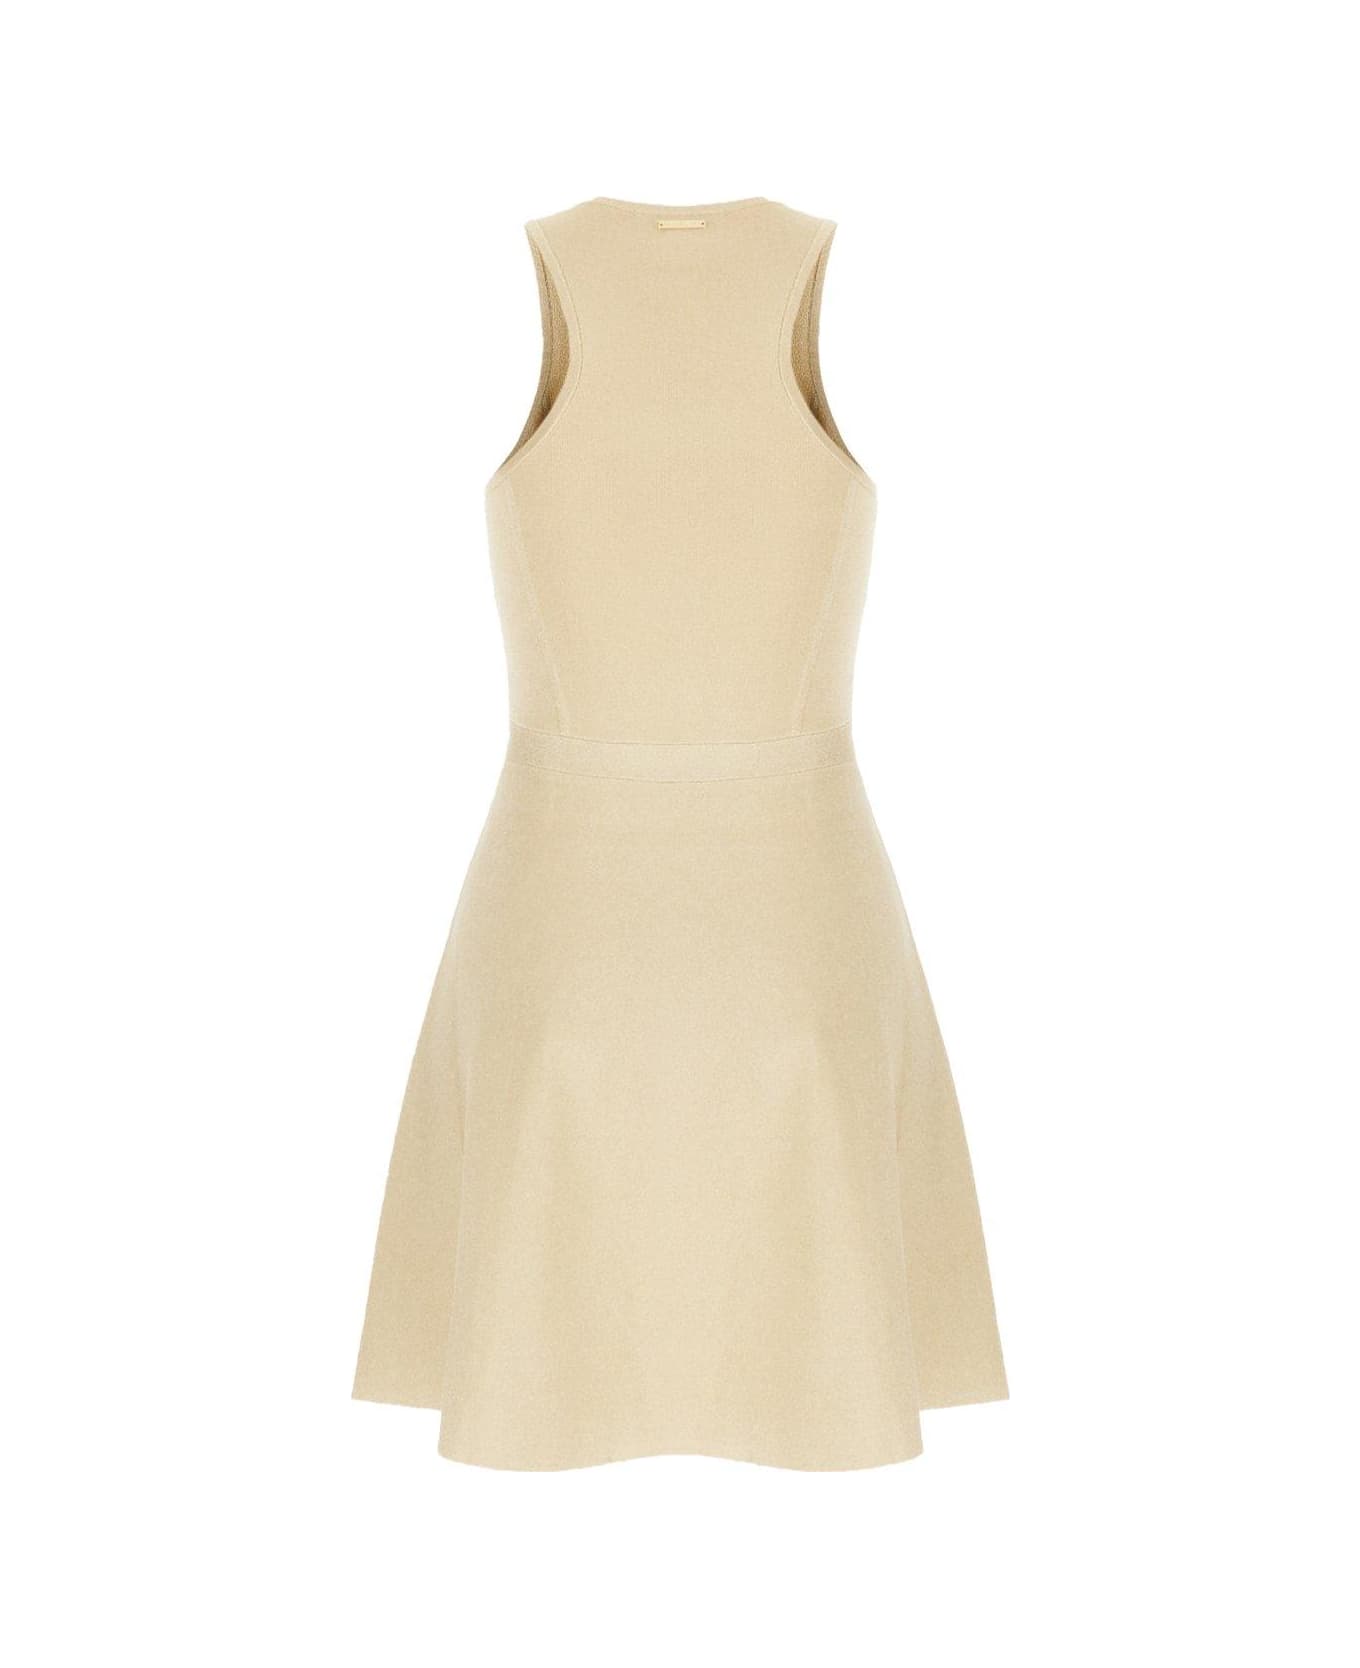 Michael Kors Zip Detailed Crewneck Sleeveless Dress - Gold